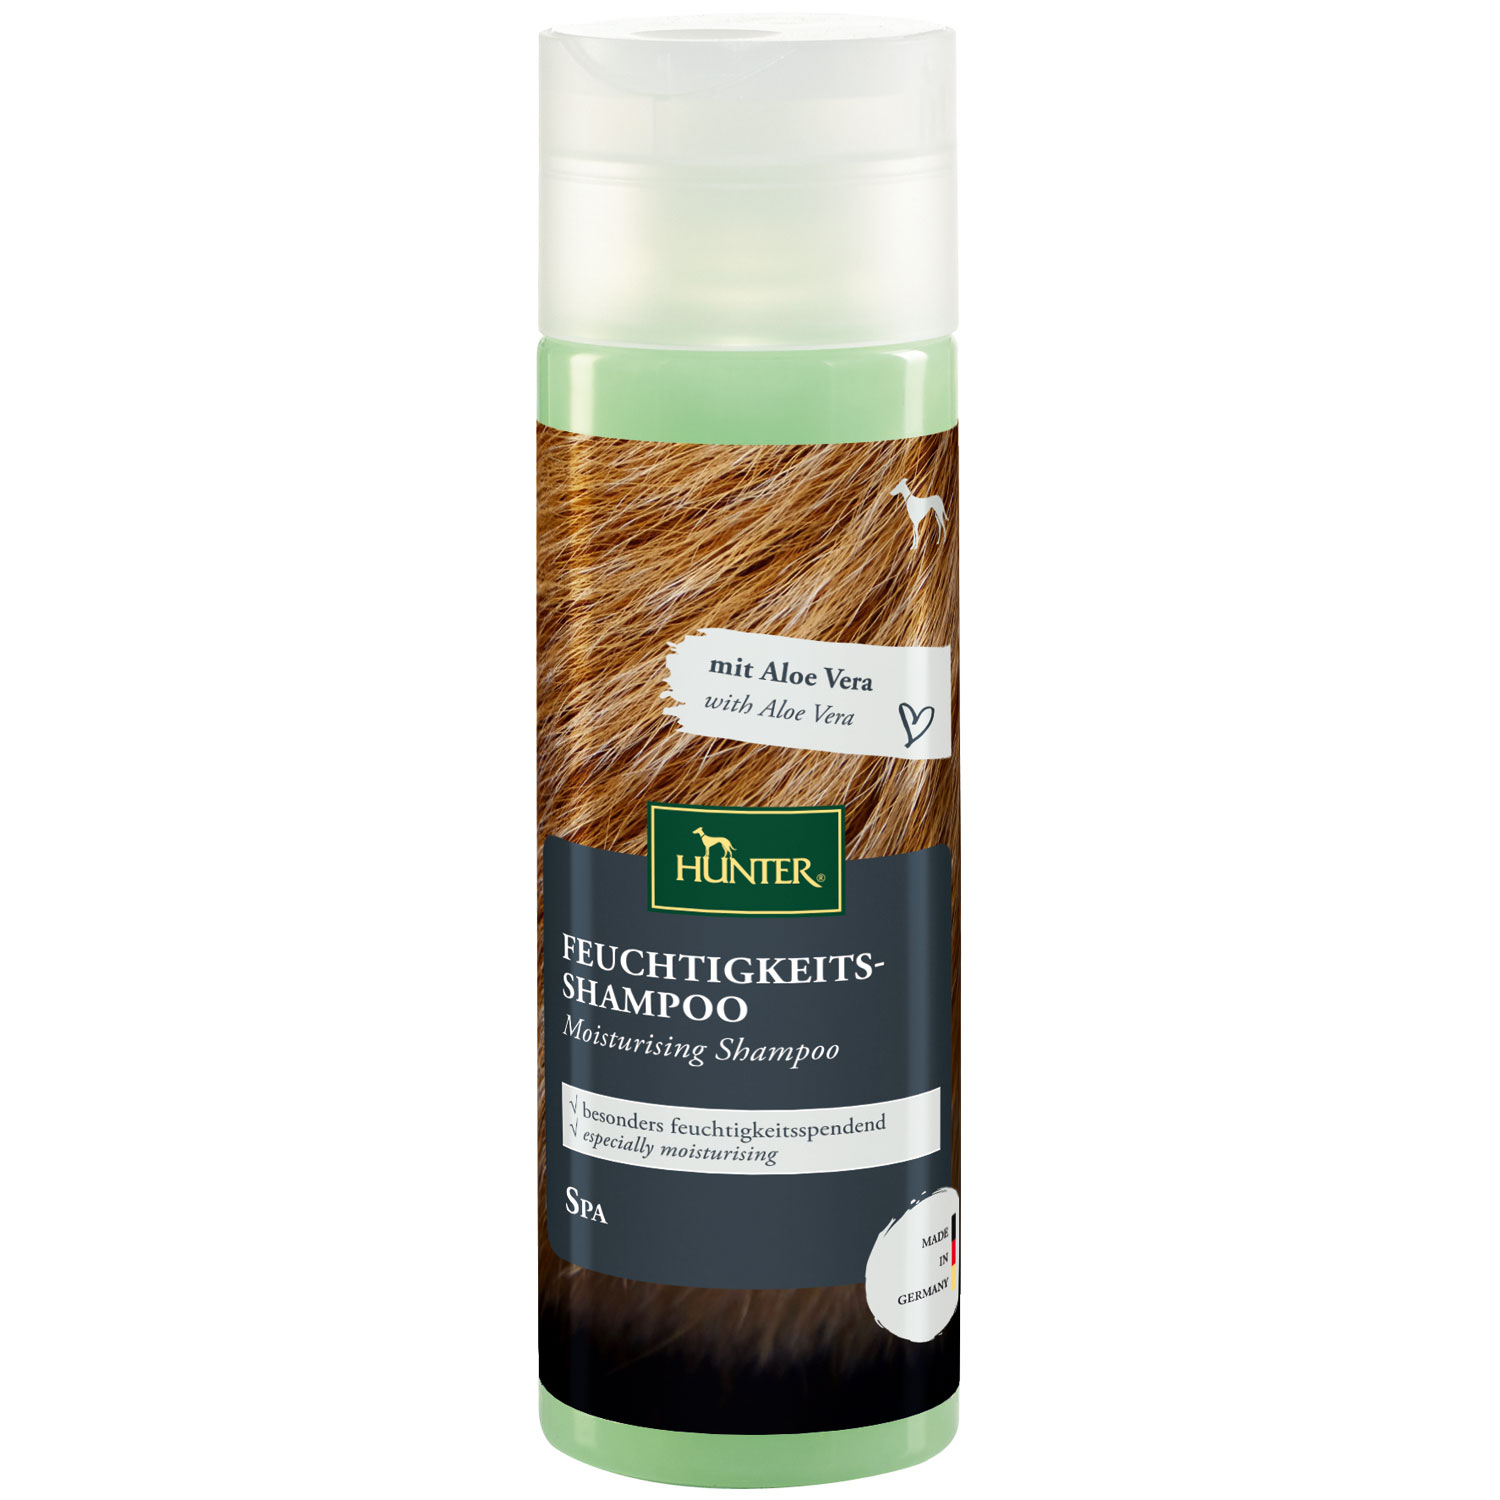 Hunter Shampoo Feuchtigkeit mit Aloe Vera 200ml